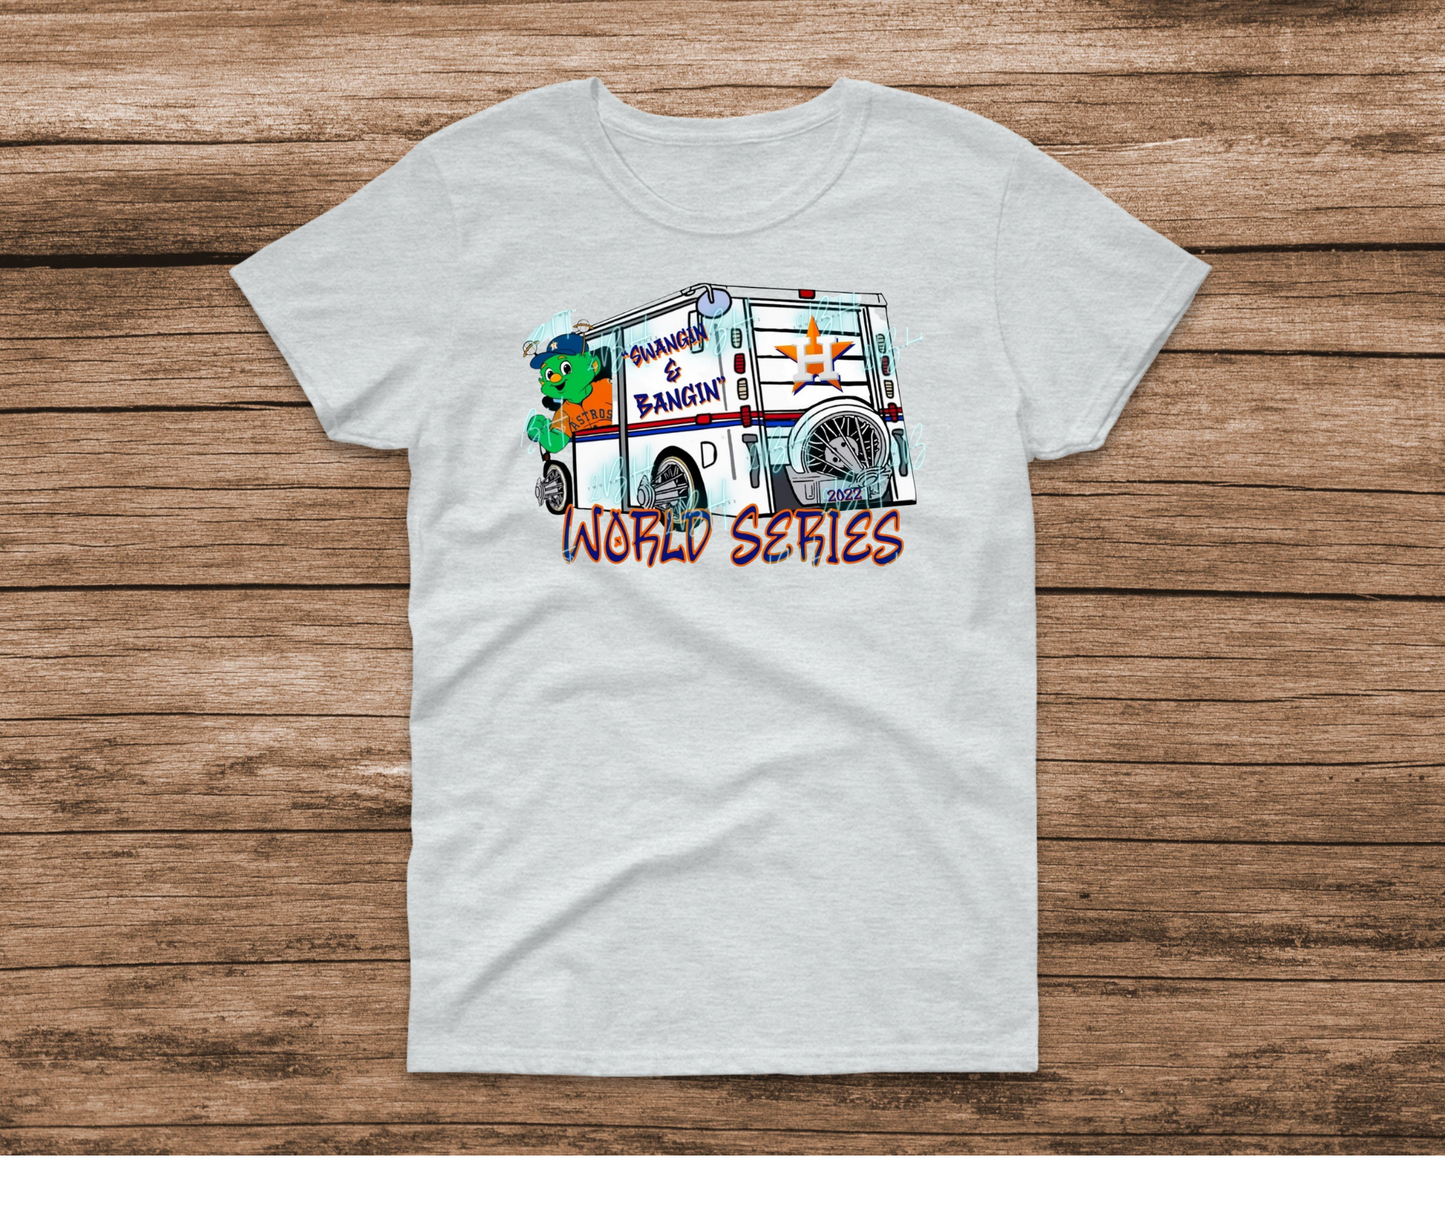 Orbit Astros Shirt - Shirt Low Price